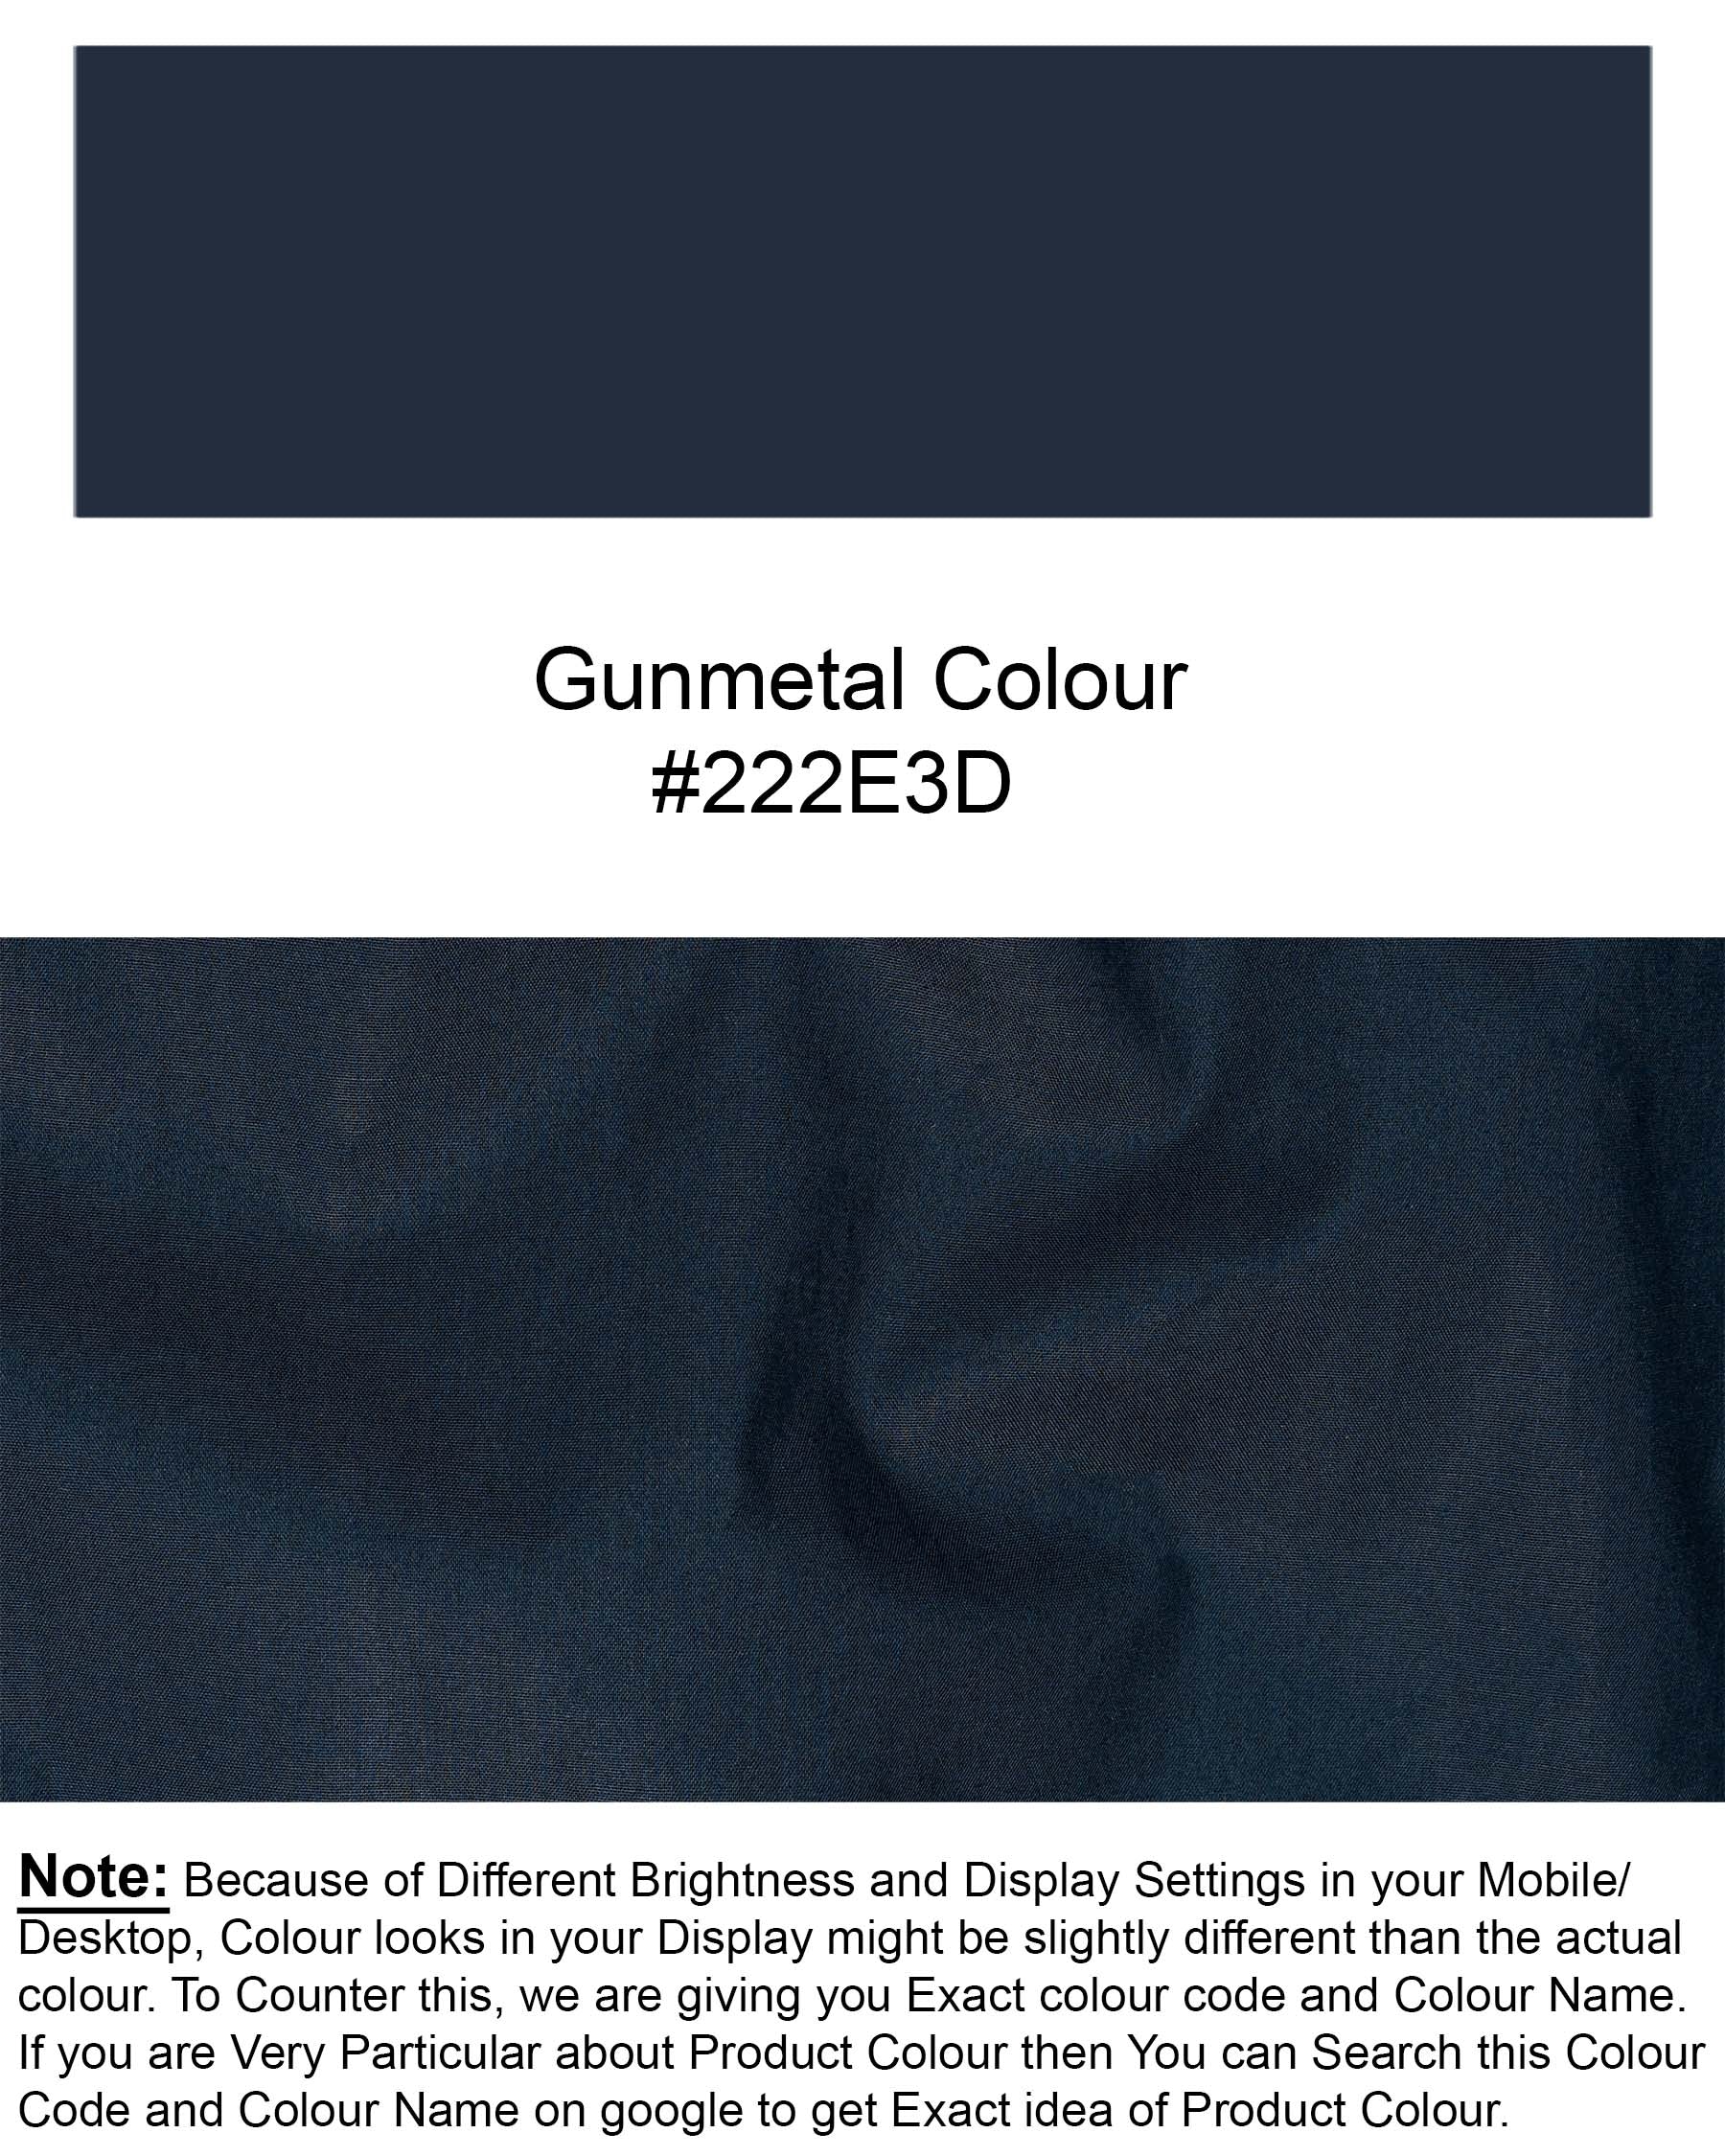 Gunmetal Navy Blue Super Soft Premium Cotton Shirt 7628-M-38, 7628-M-H-38, 7628-M-39,7628-M-H-39, 7628-M-40, 7628-M-H-40, 7628-M-42, 7628-M-H-42, 7628-M-44, 7628-M-H-44, 7628-M-46, 7628-M-H-46, 7628-M-48, 7628-M-H-48, 7628-M-50, 7628-M-H-50, 7628-M-52, 7628-M-H-52